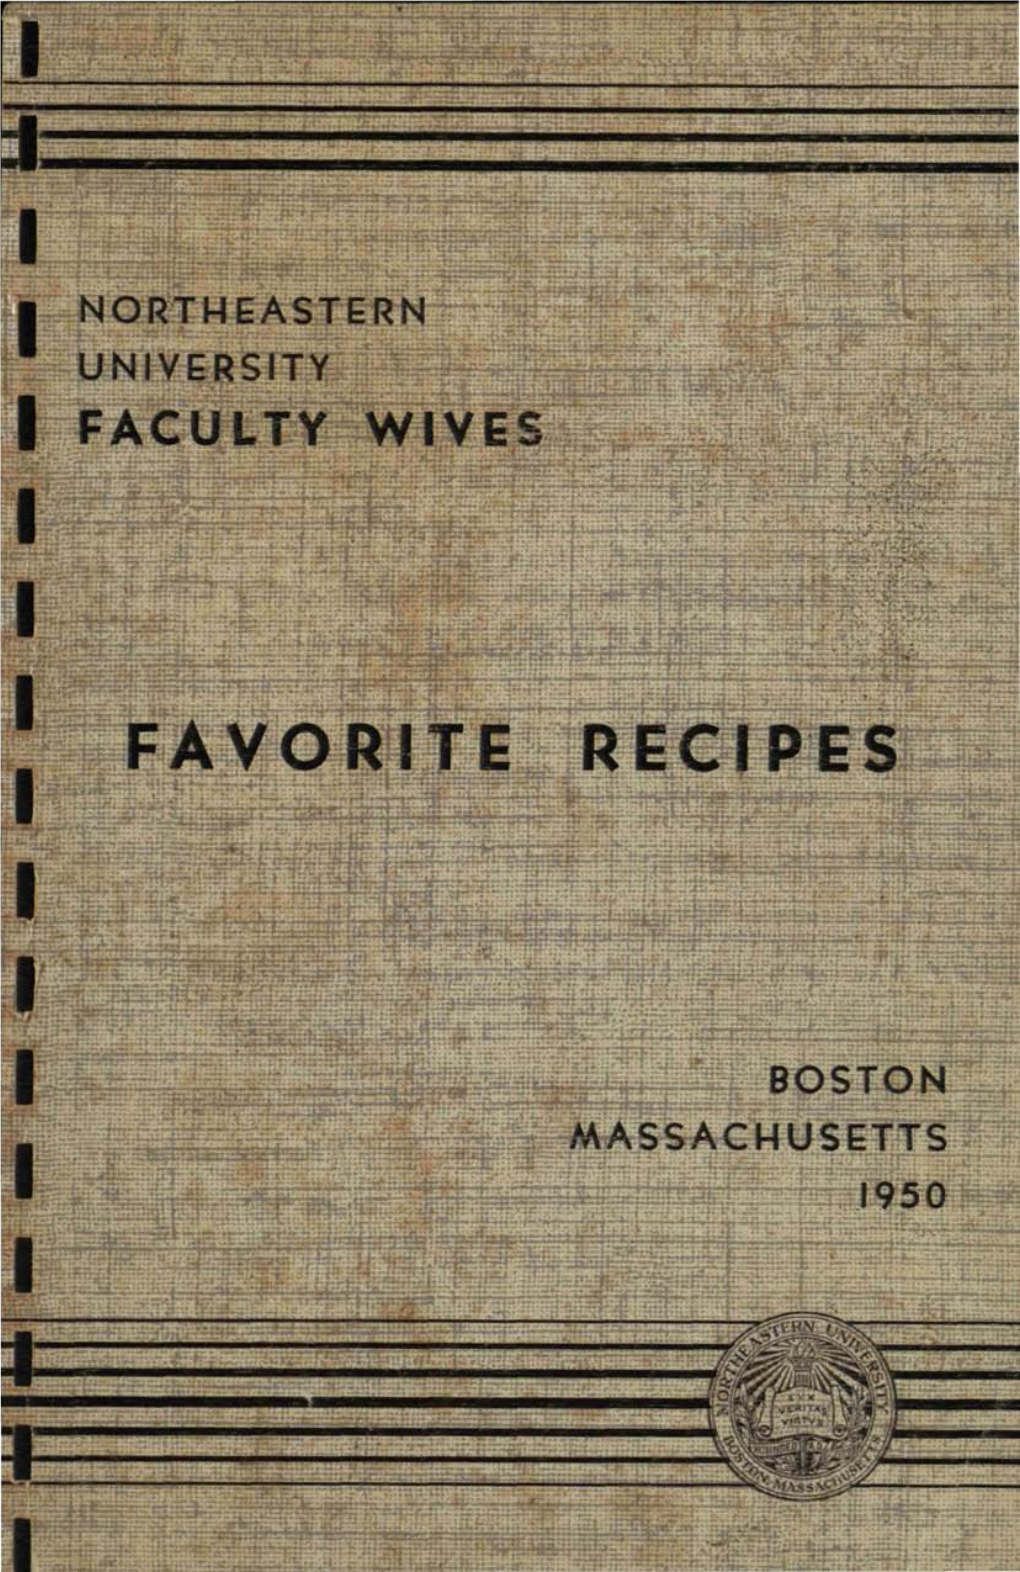 Favorite Recipes Cookbook